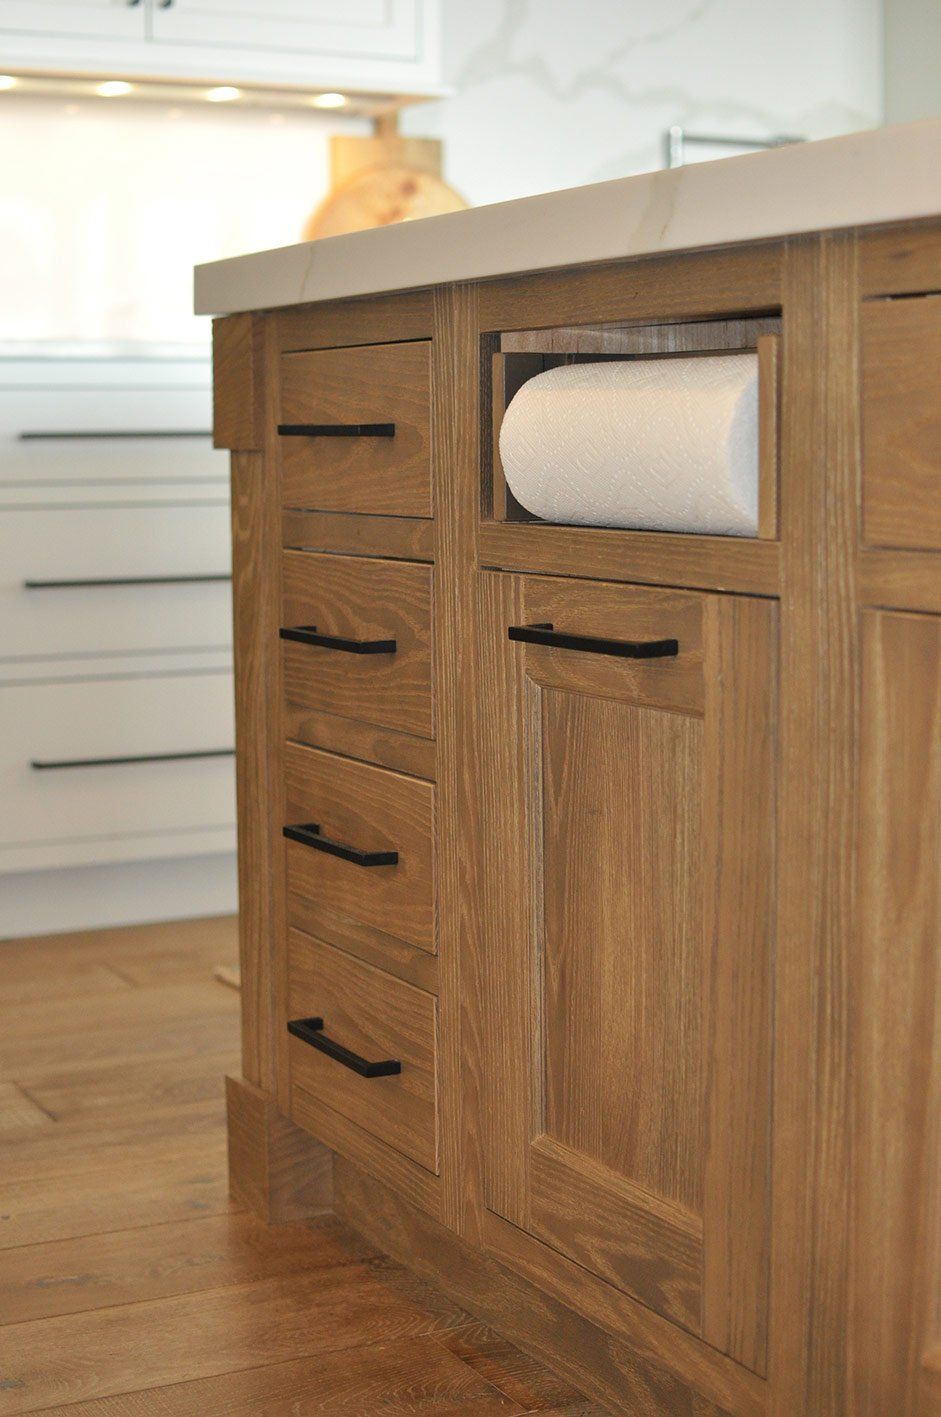 Kitchen Cabinet — Cabinet and Tissue in Addison, IL